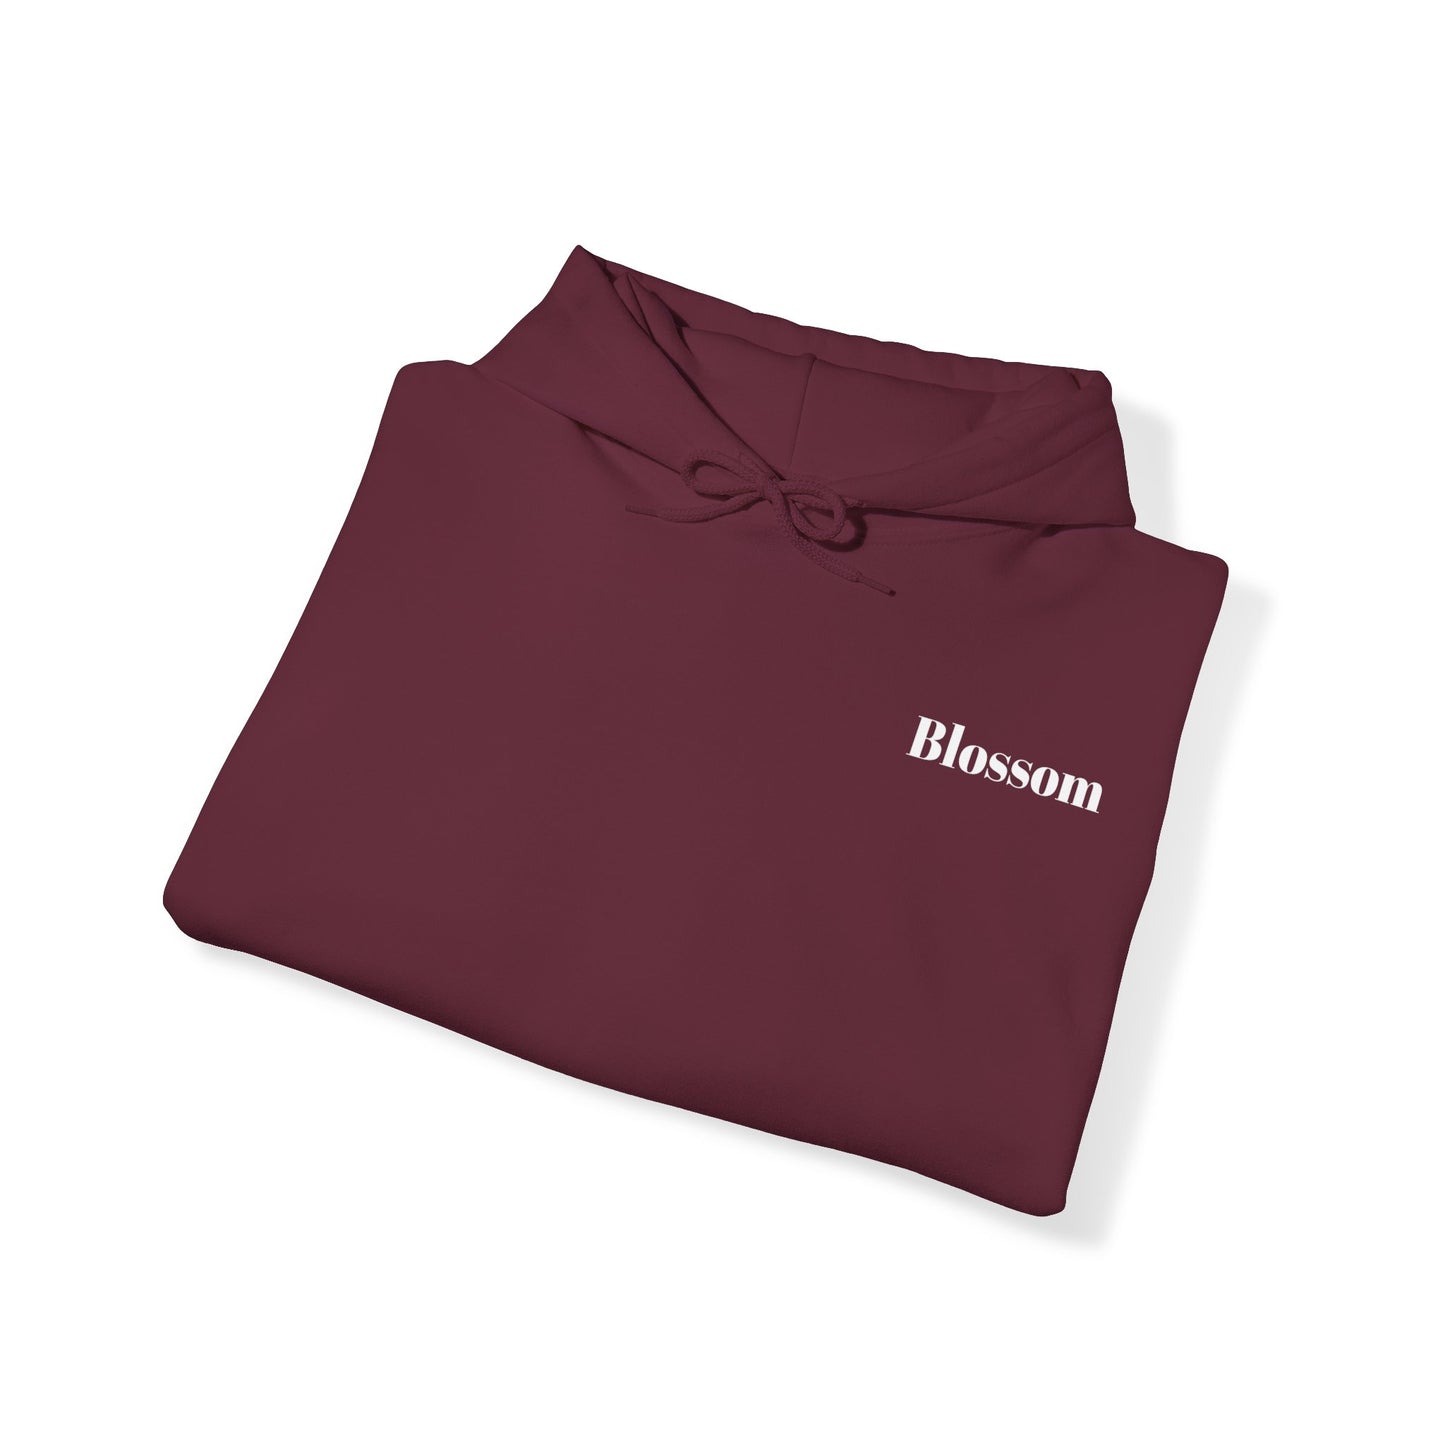 Blossom Unisex Hooded Sweatshirt with Heavy Blend Fabric19